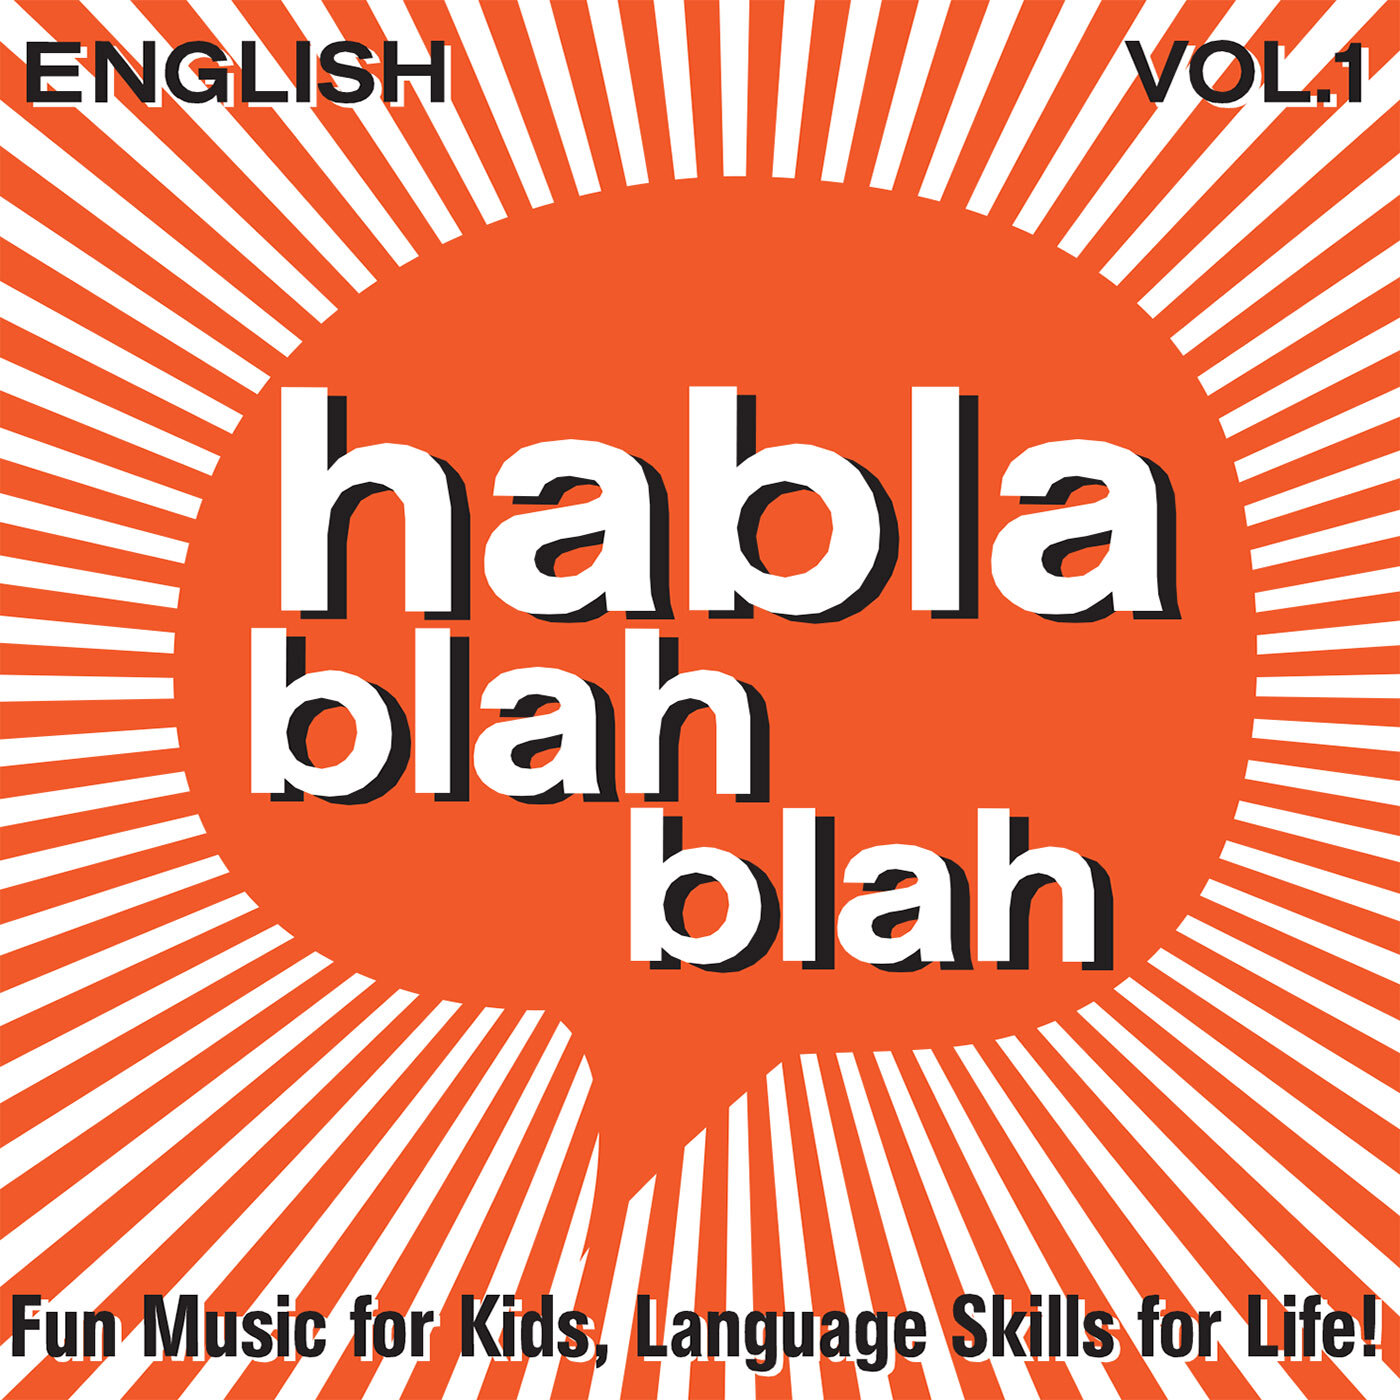 HBB  English, Volume 1